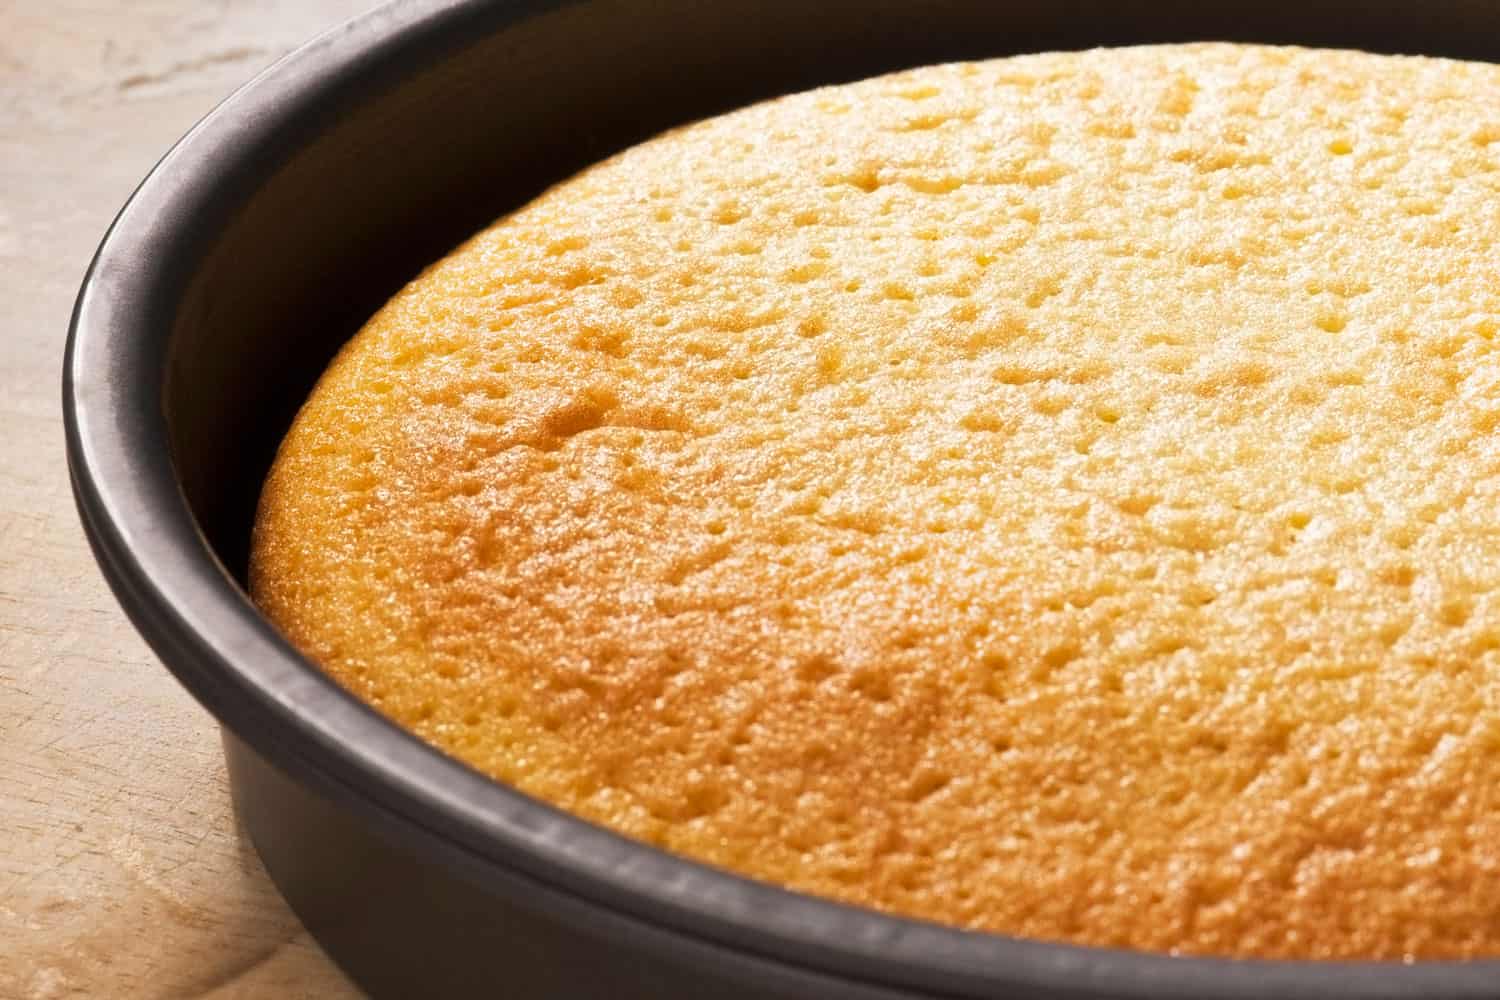 Freshly baked sponge cake in a round baking tin